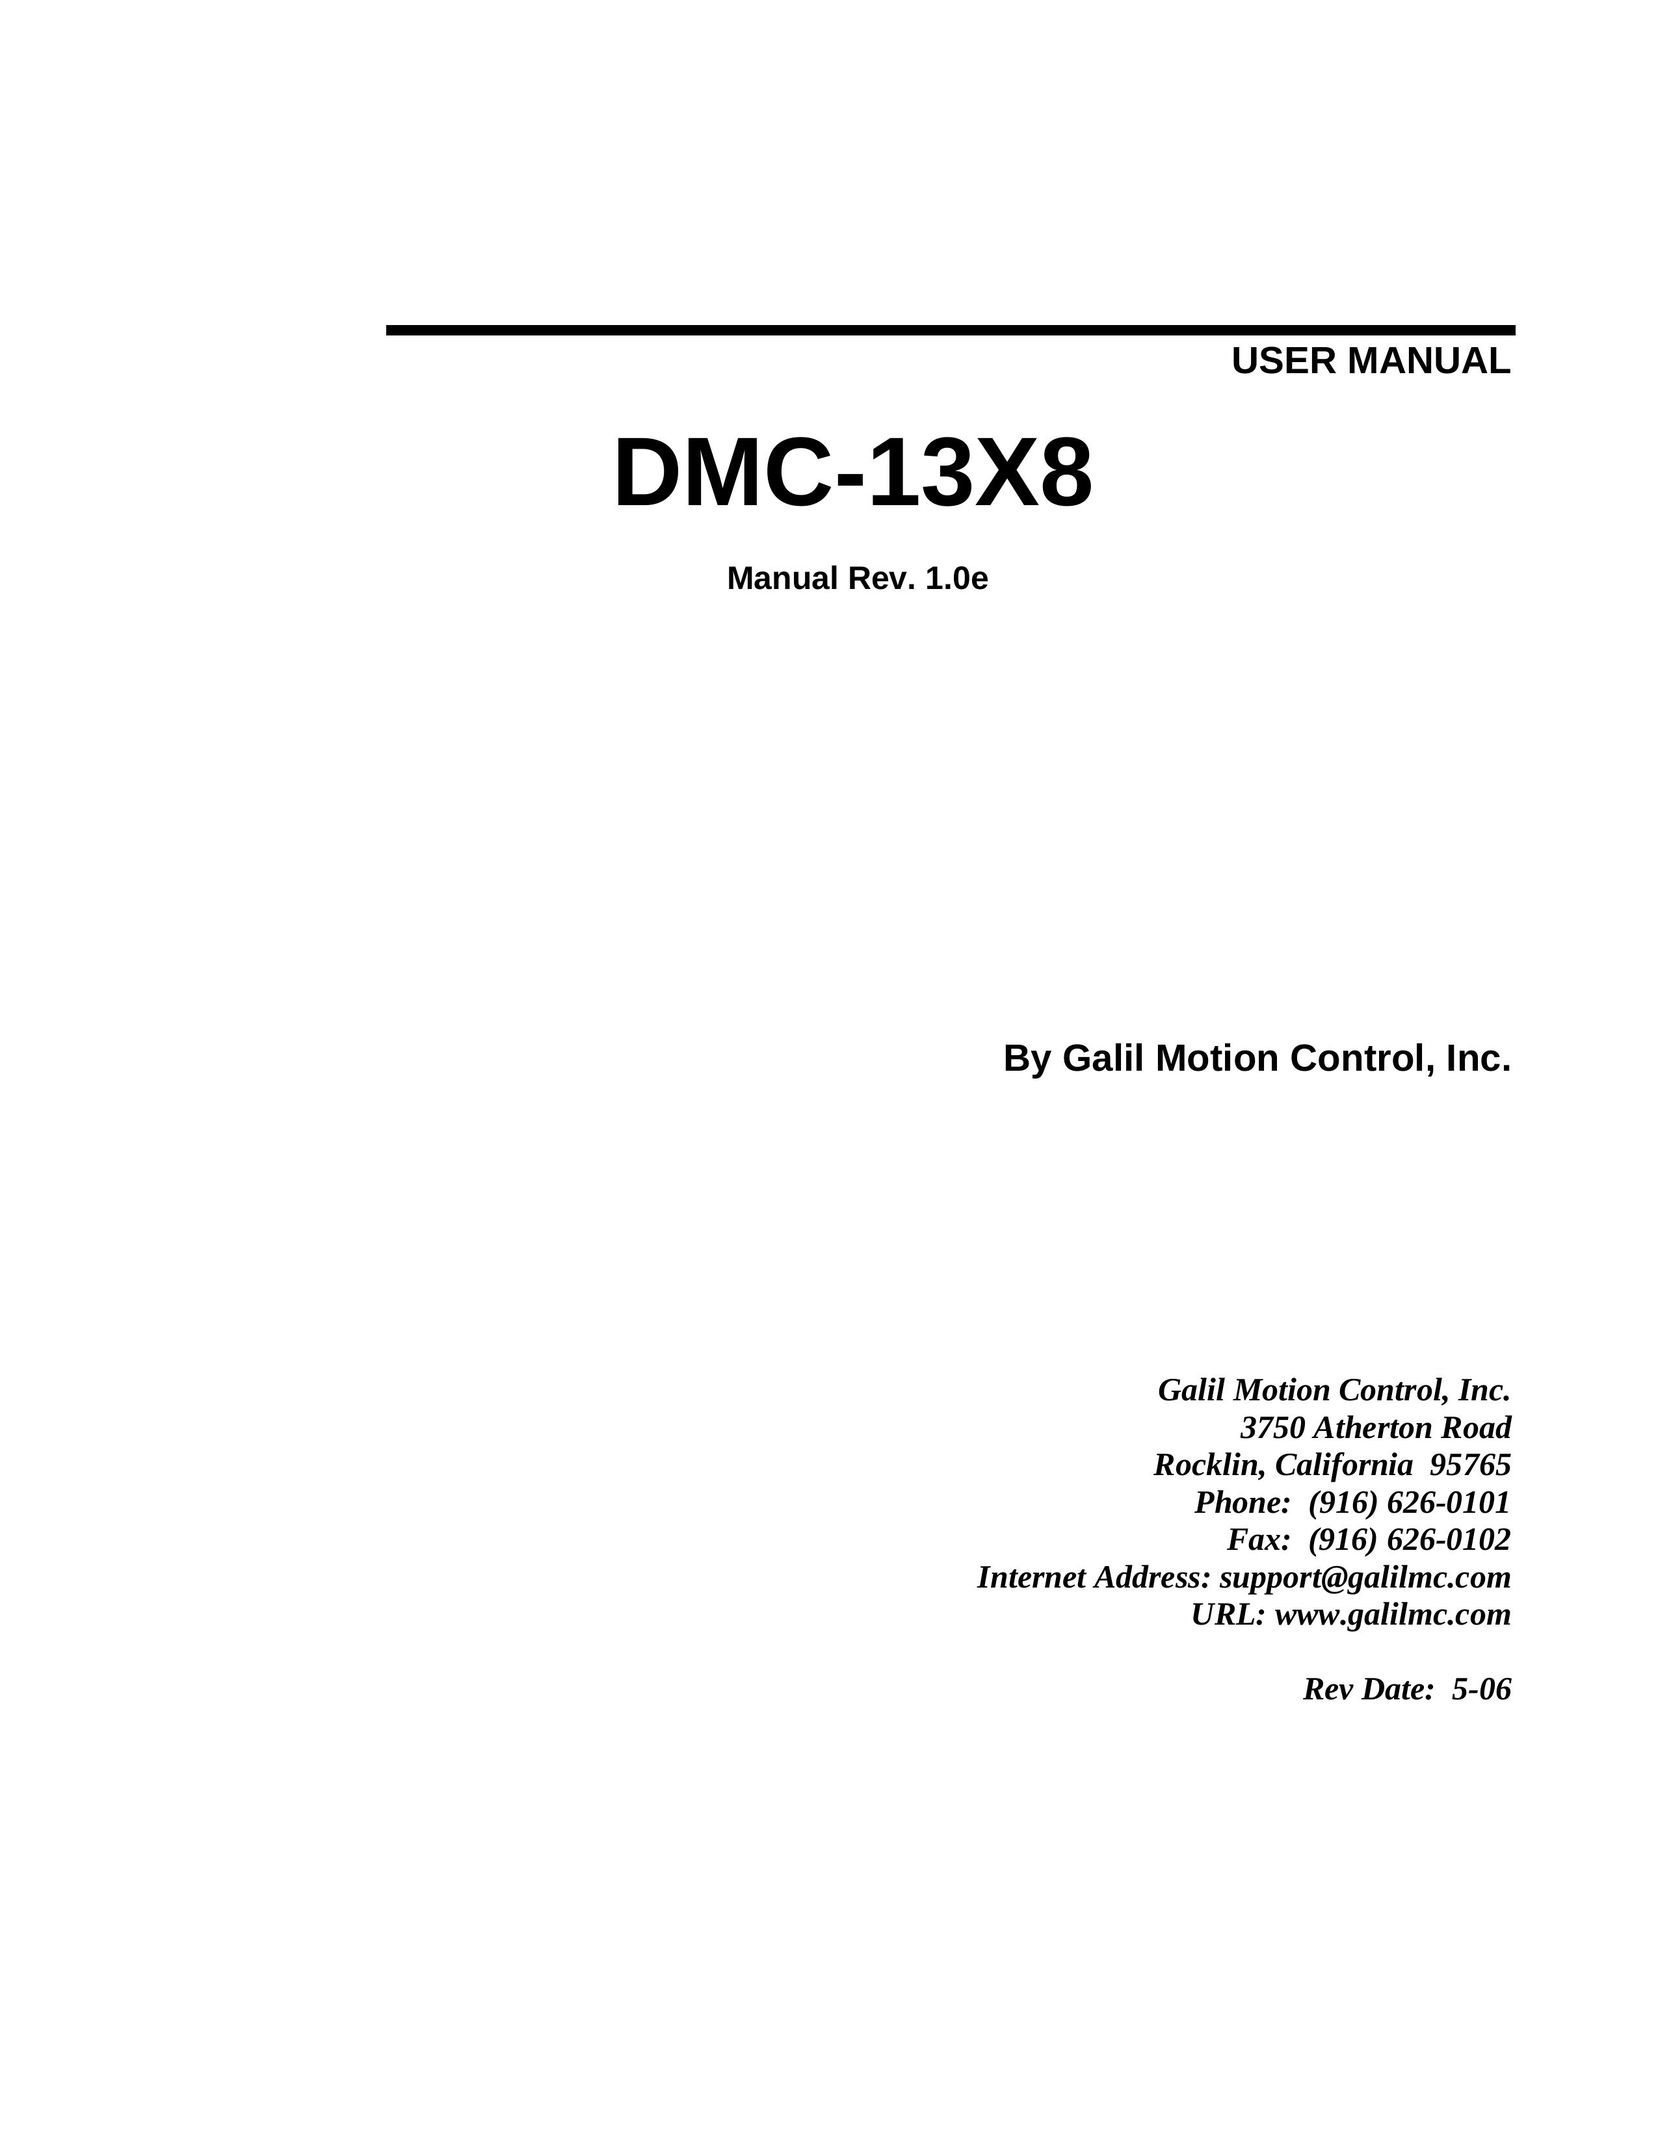 Galil DMC-13X8 Home Theater Server User Manual